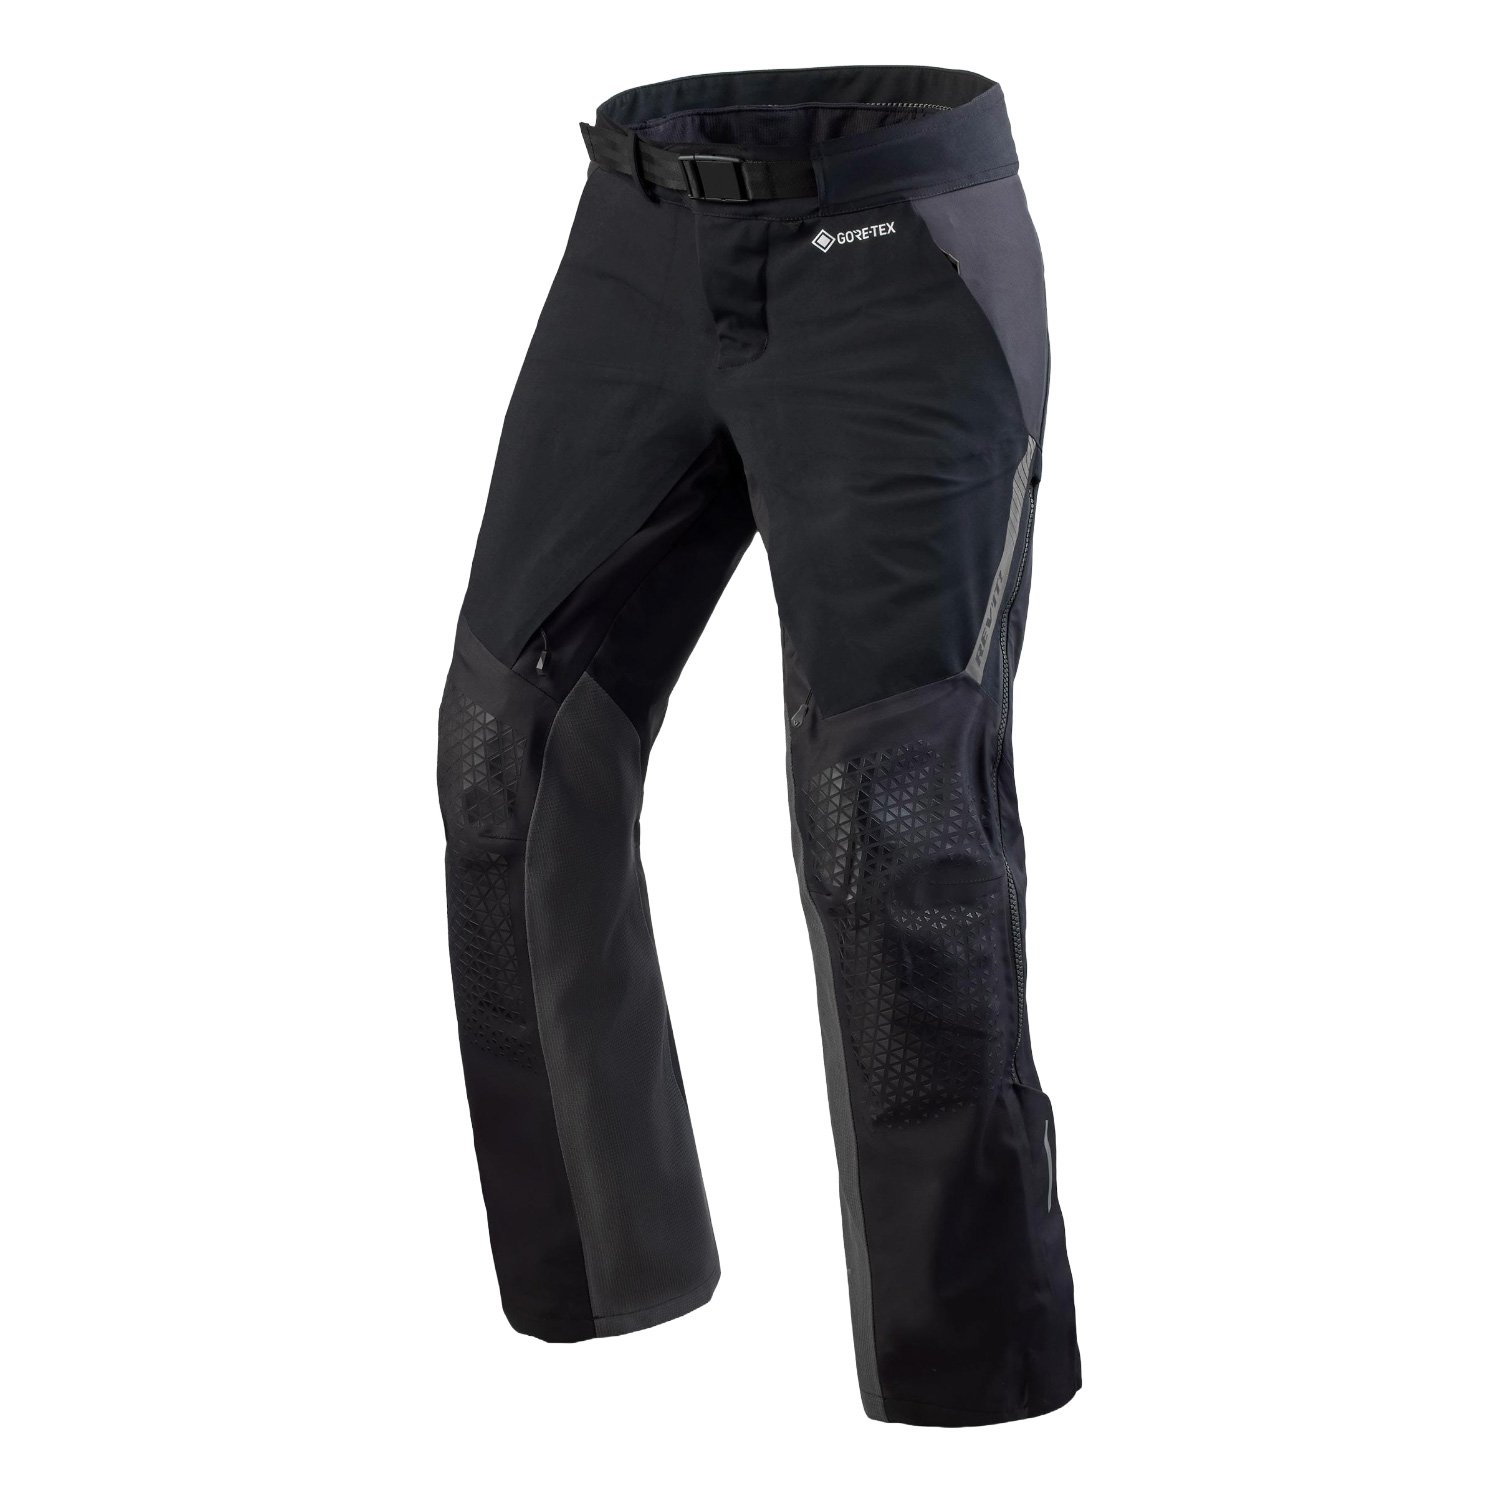 Image of REV'IT! Stratum GTX Black Grey Long Motorcycle Pants Size M ID 8700001351270